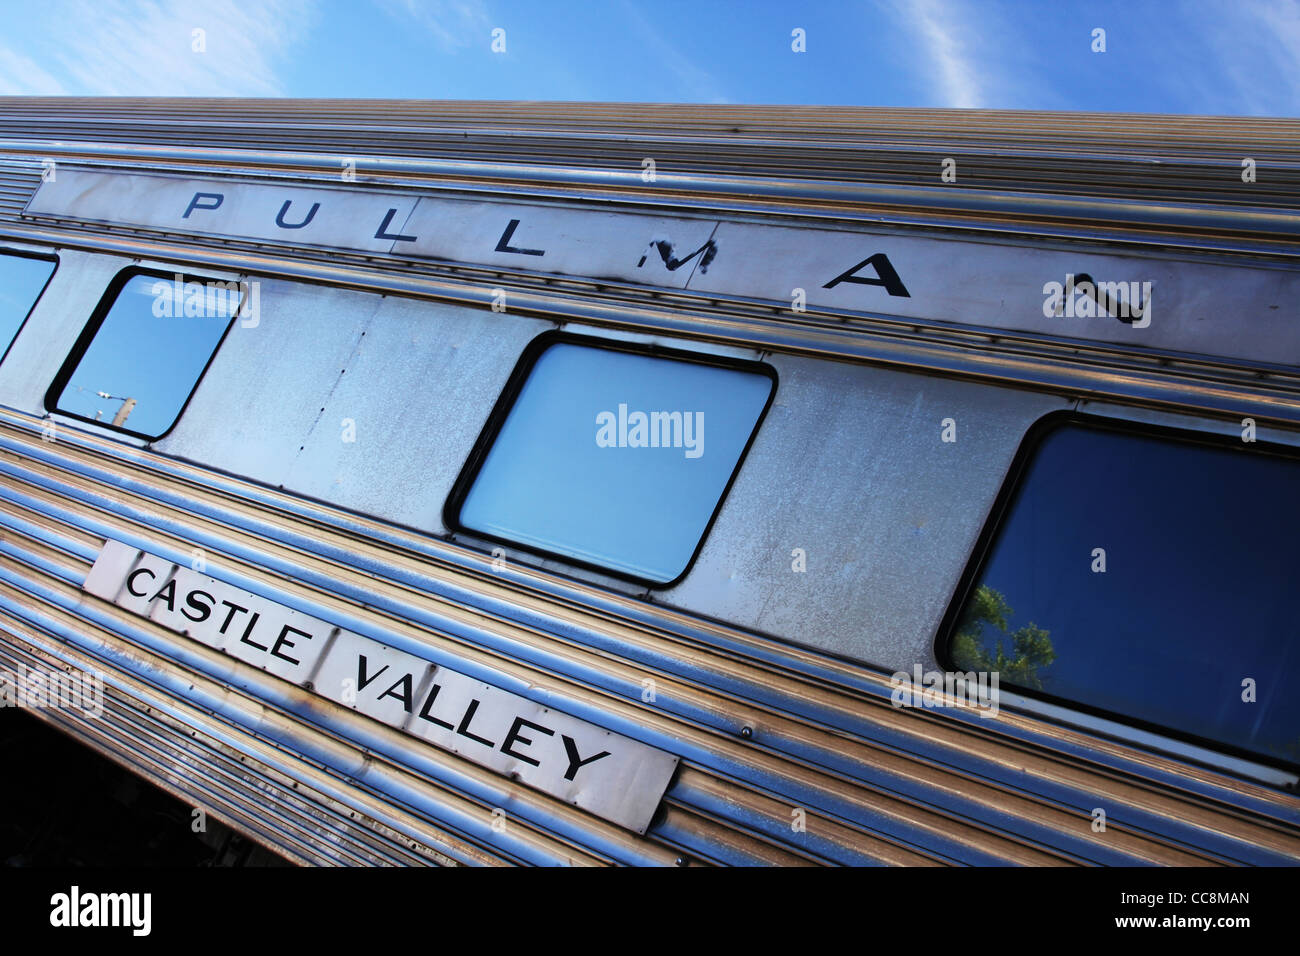 Pullman rail car named Castle Valley. The Railway Museum of Greater Cincinnati, Covington, Kentucky, USA. Stock Photo